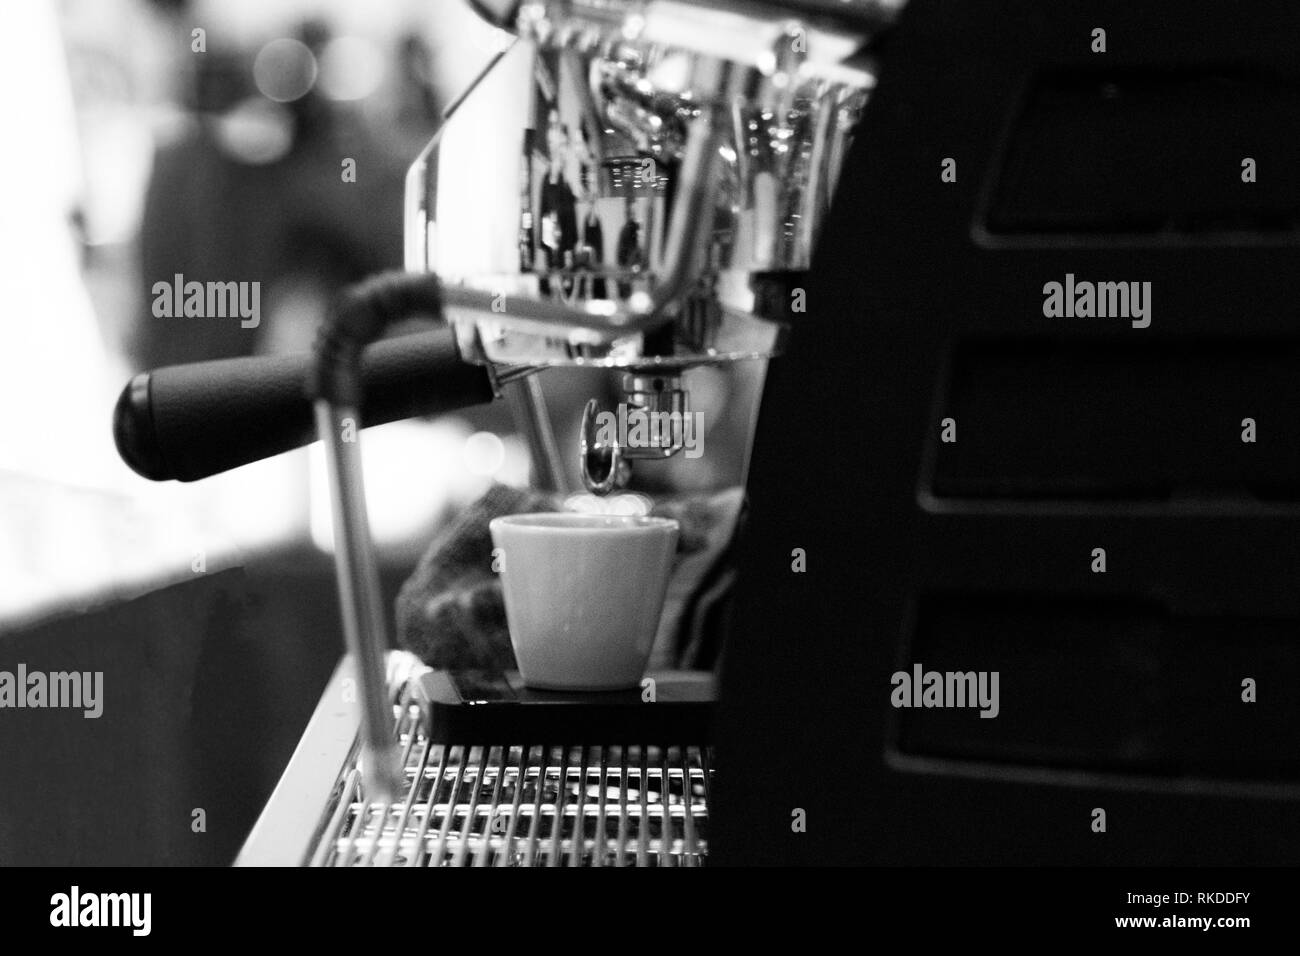 espresso shot from coffee machine in coffee shop,Coffee maker in coffee shop Stock Photo